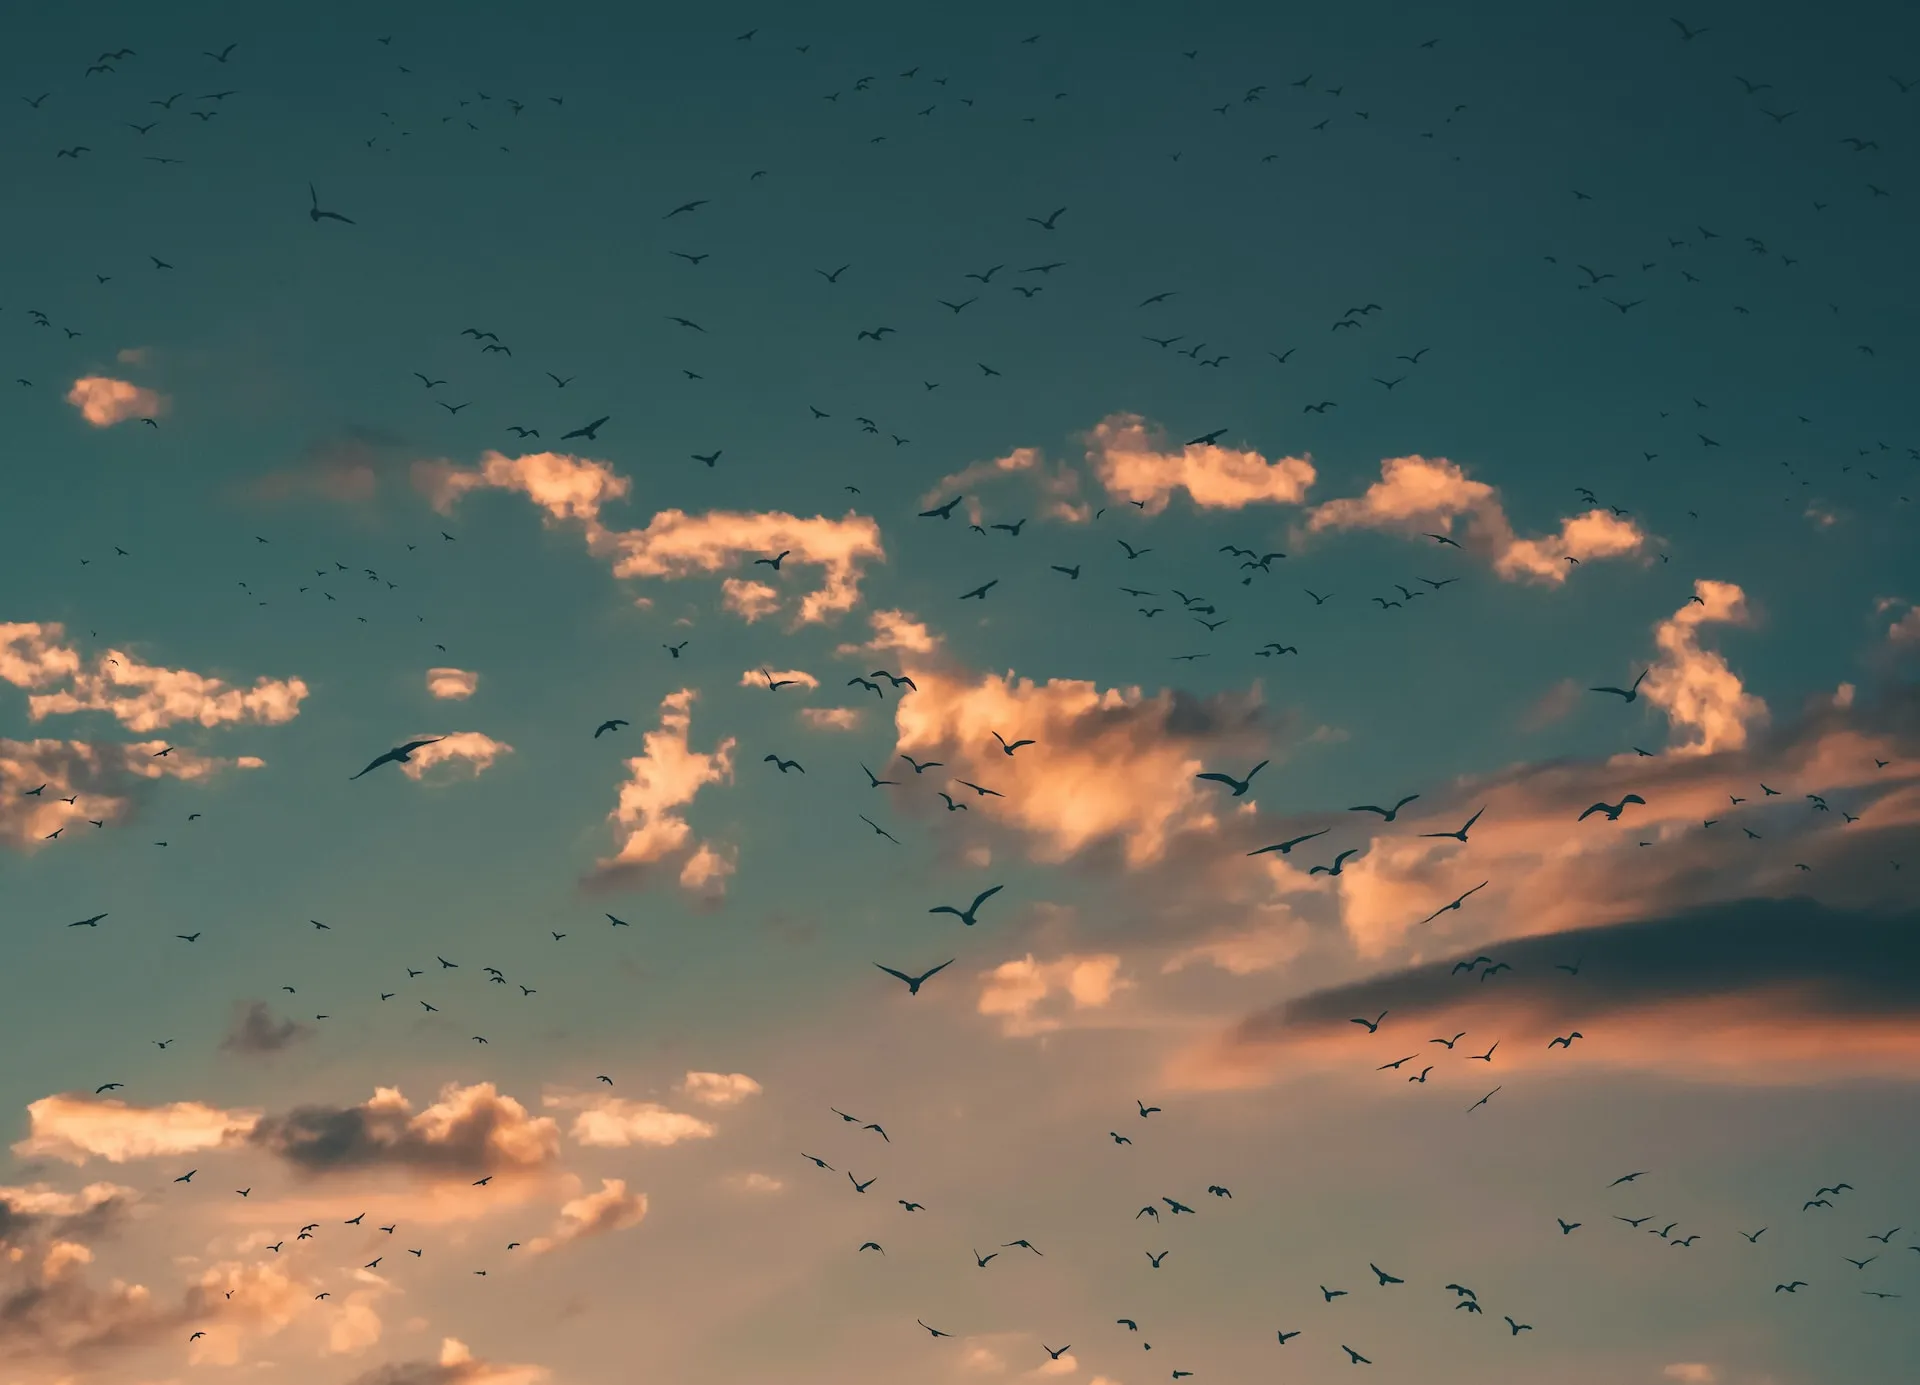 Post image: Bird flocks in the sky